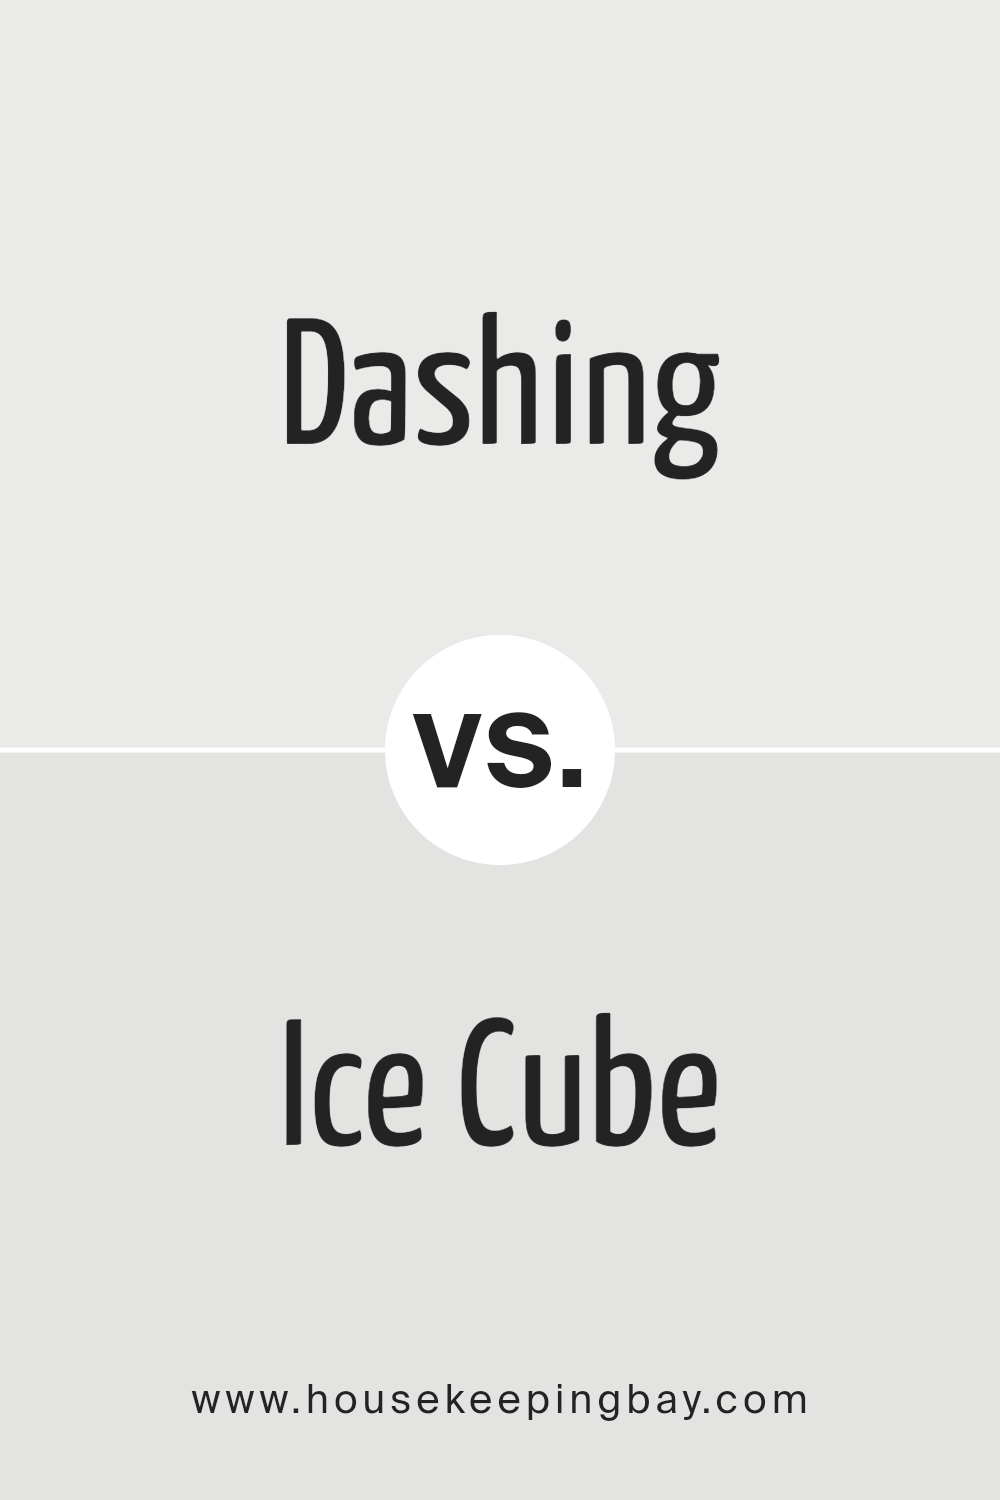 dashing_sw_9544_vs_ice_cube_sw_6252